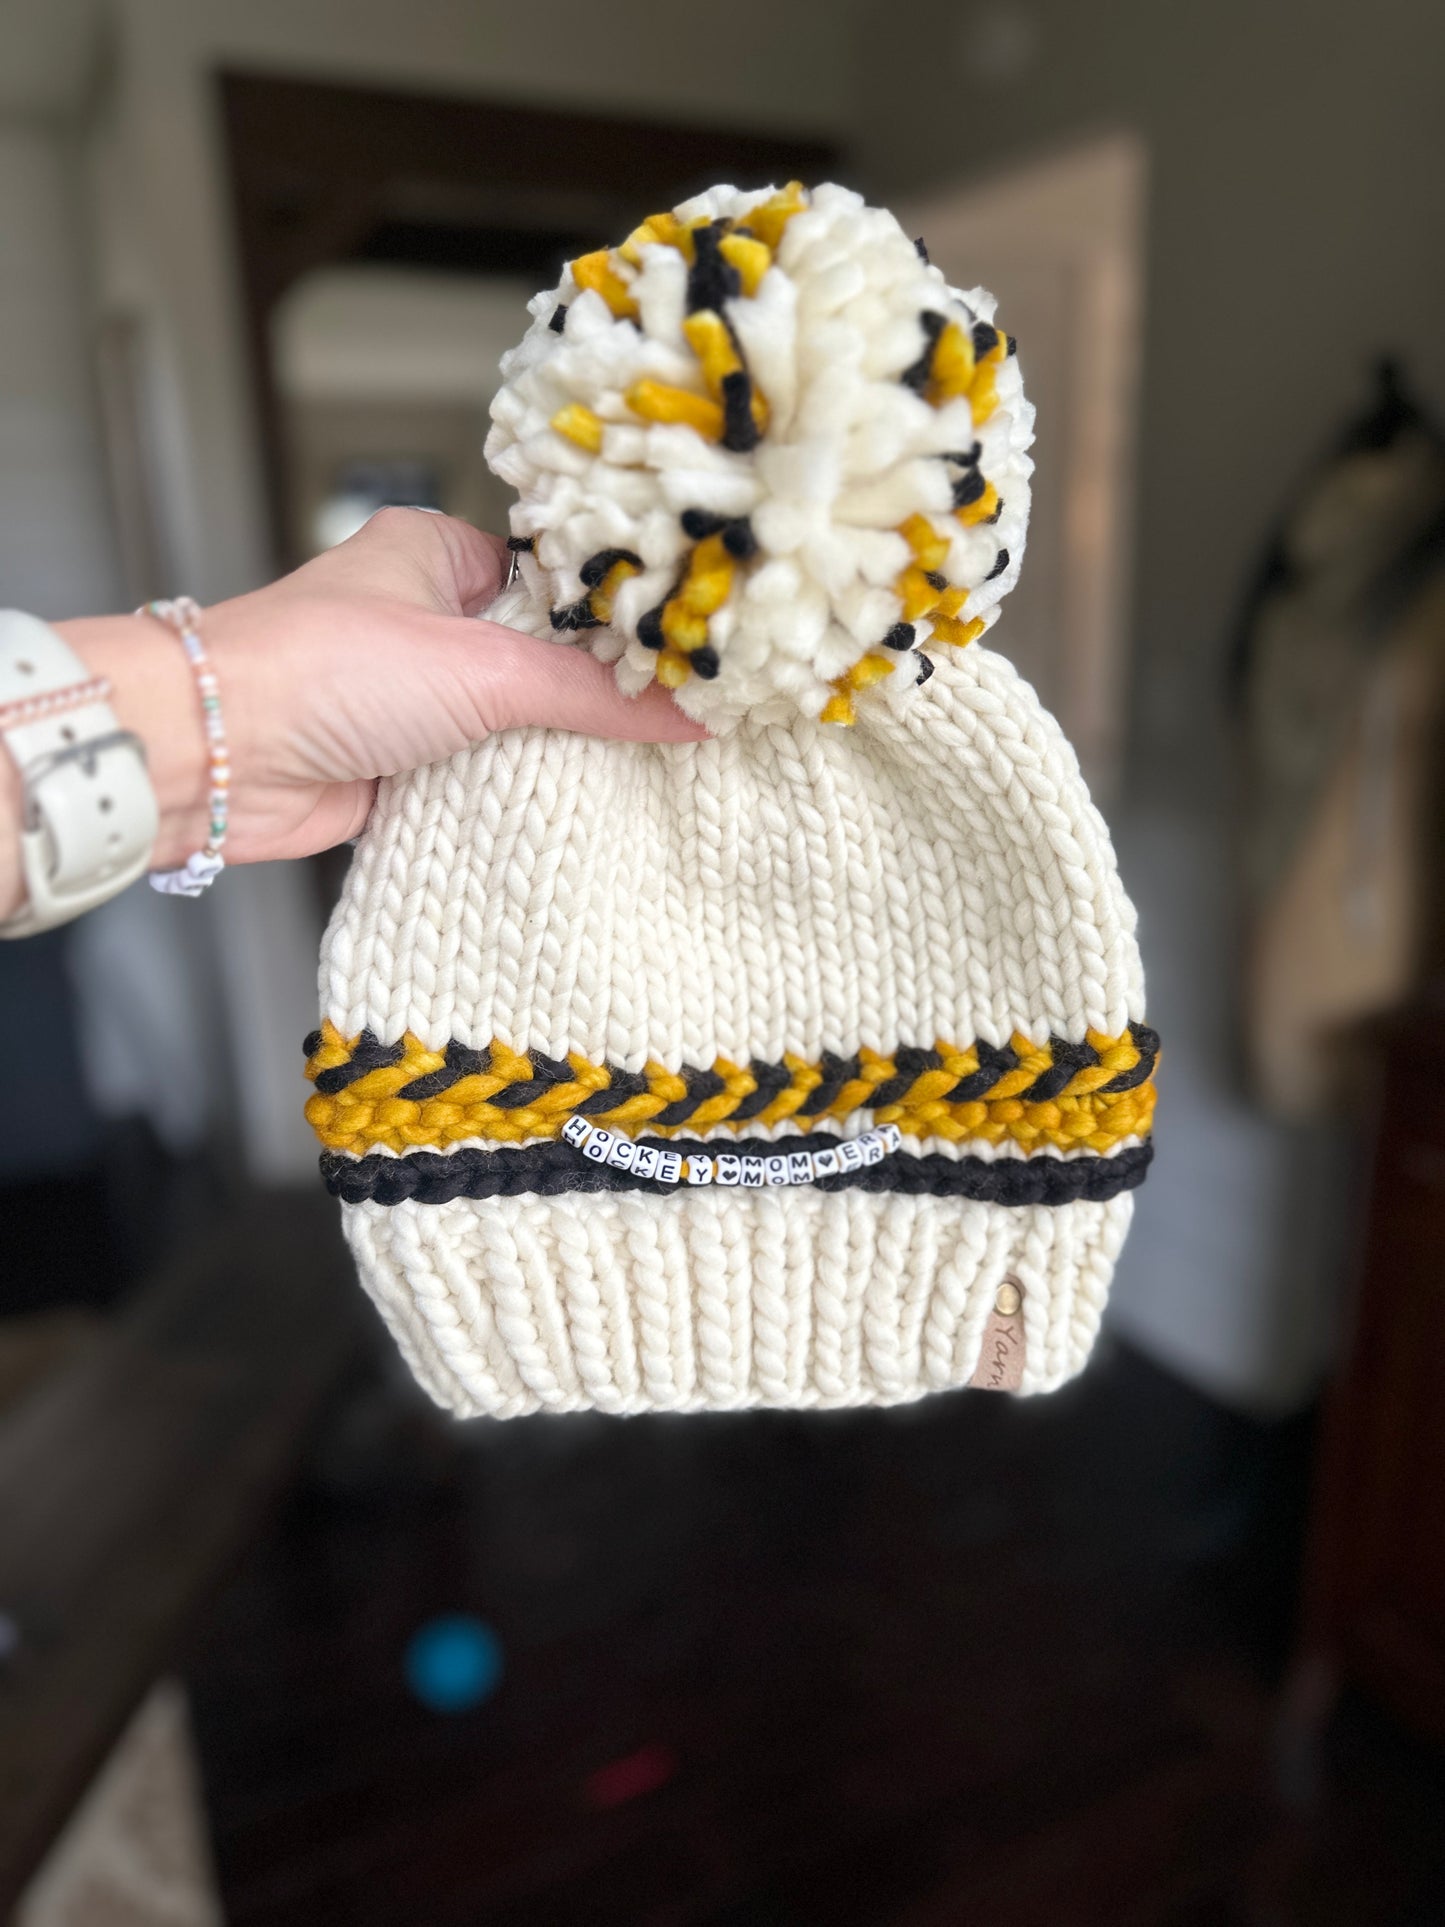 Hockey mom merino wool knit hat with merino wool Pom